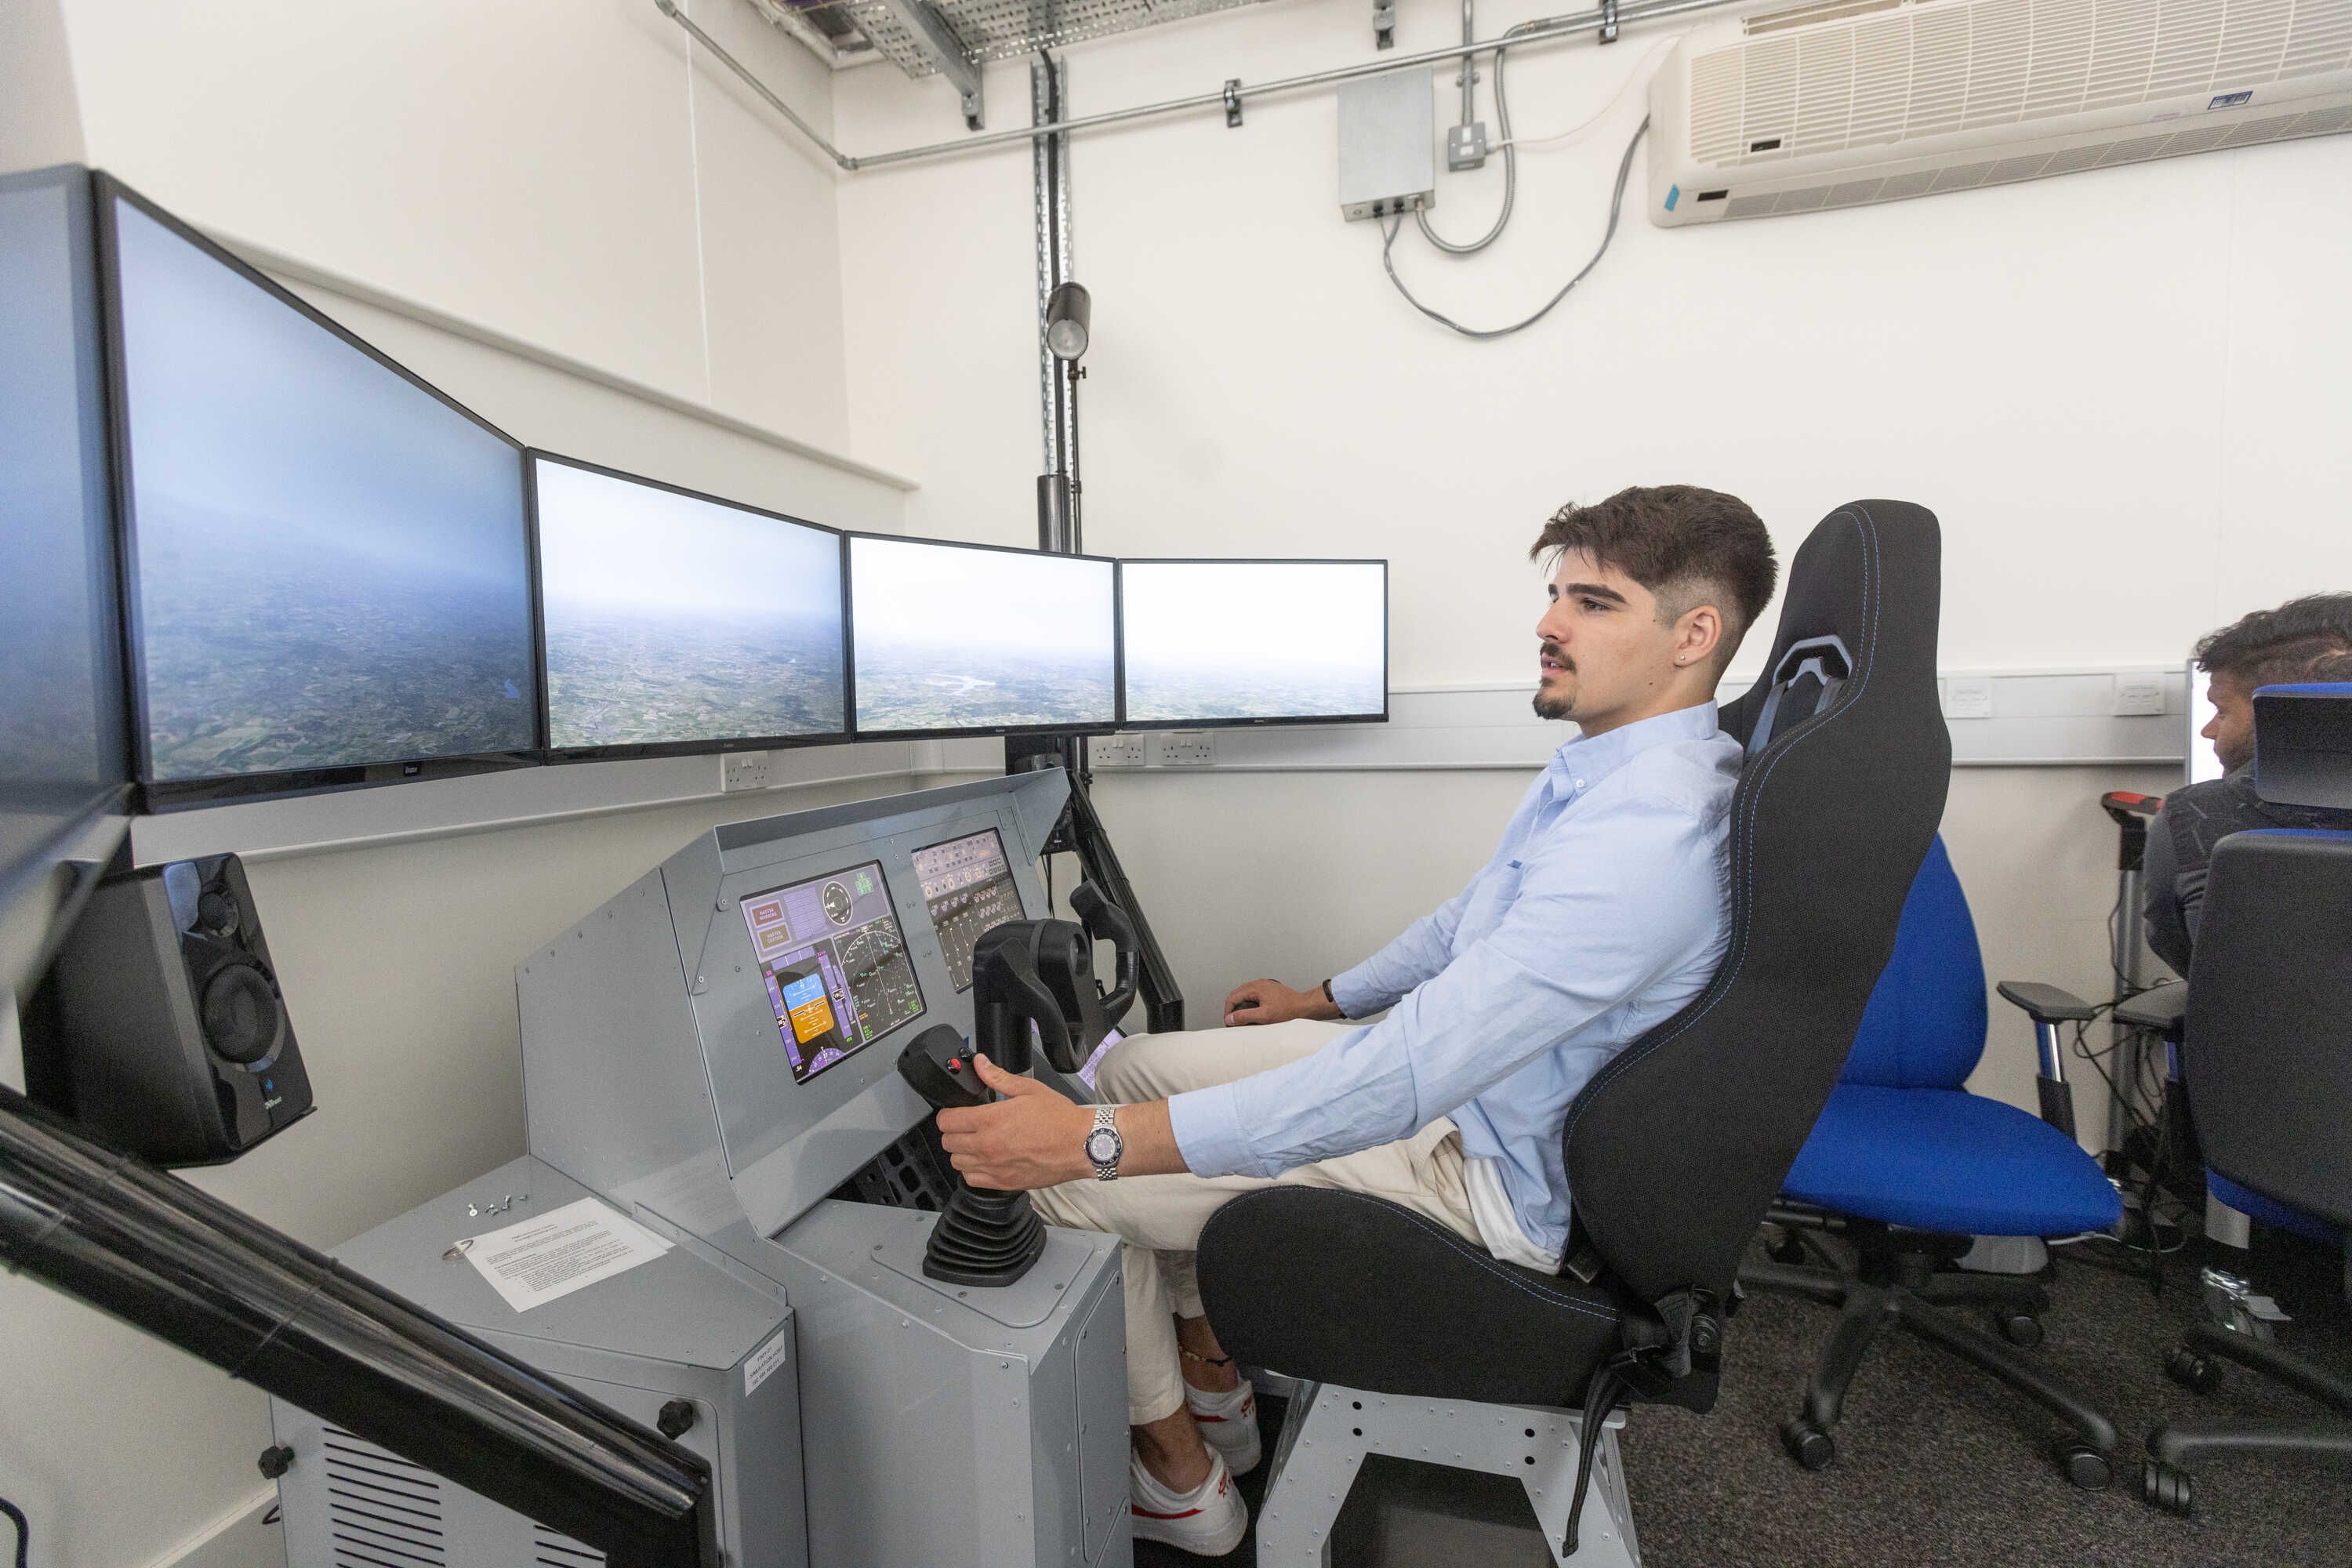 A male student operating a flight simulator machine